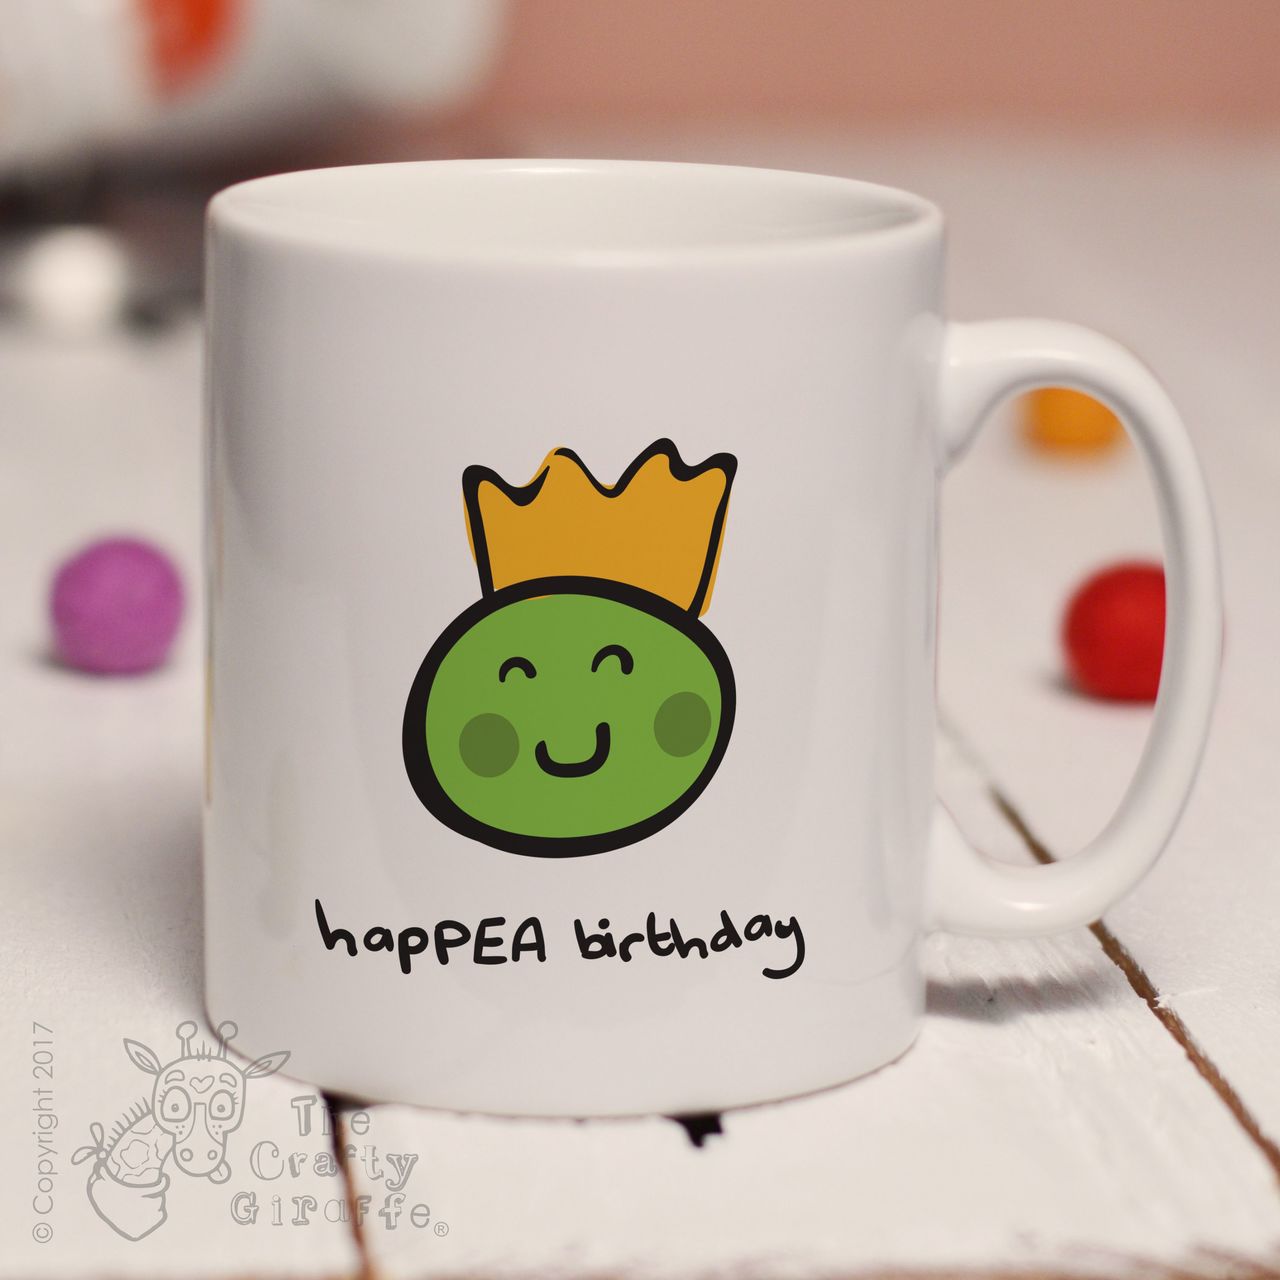 Happea Birthday mug